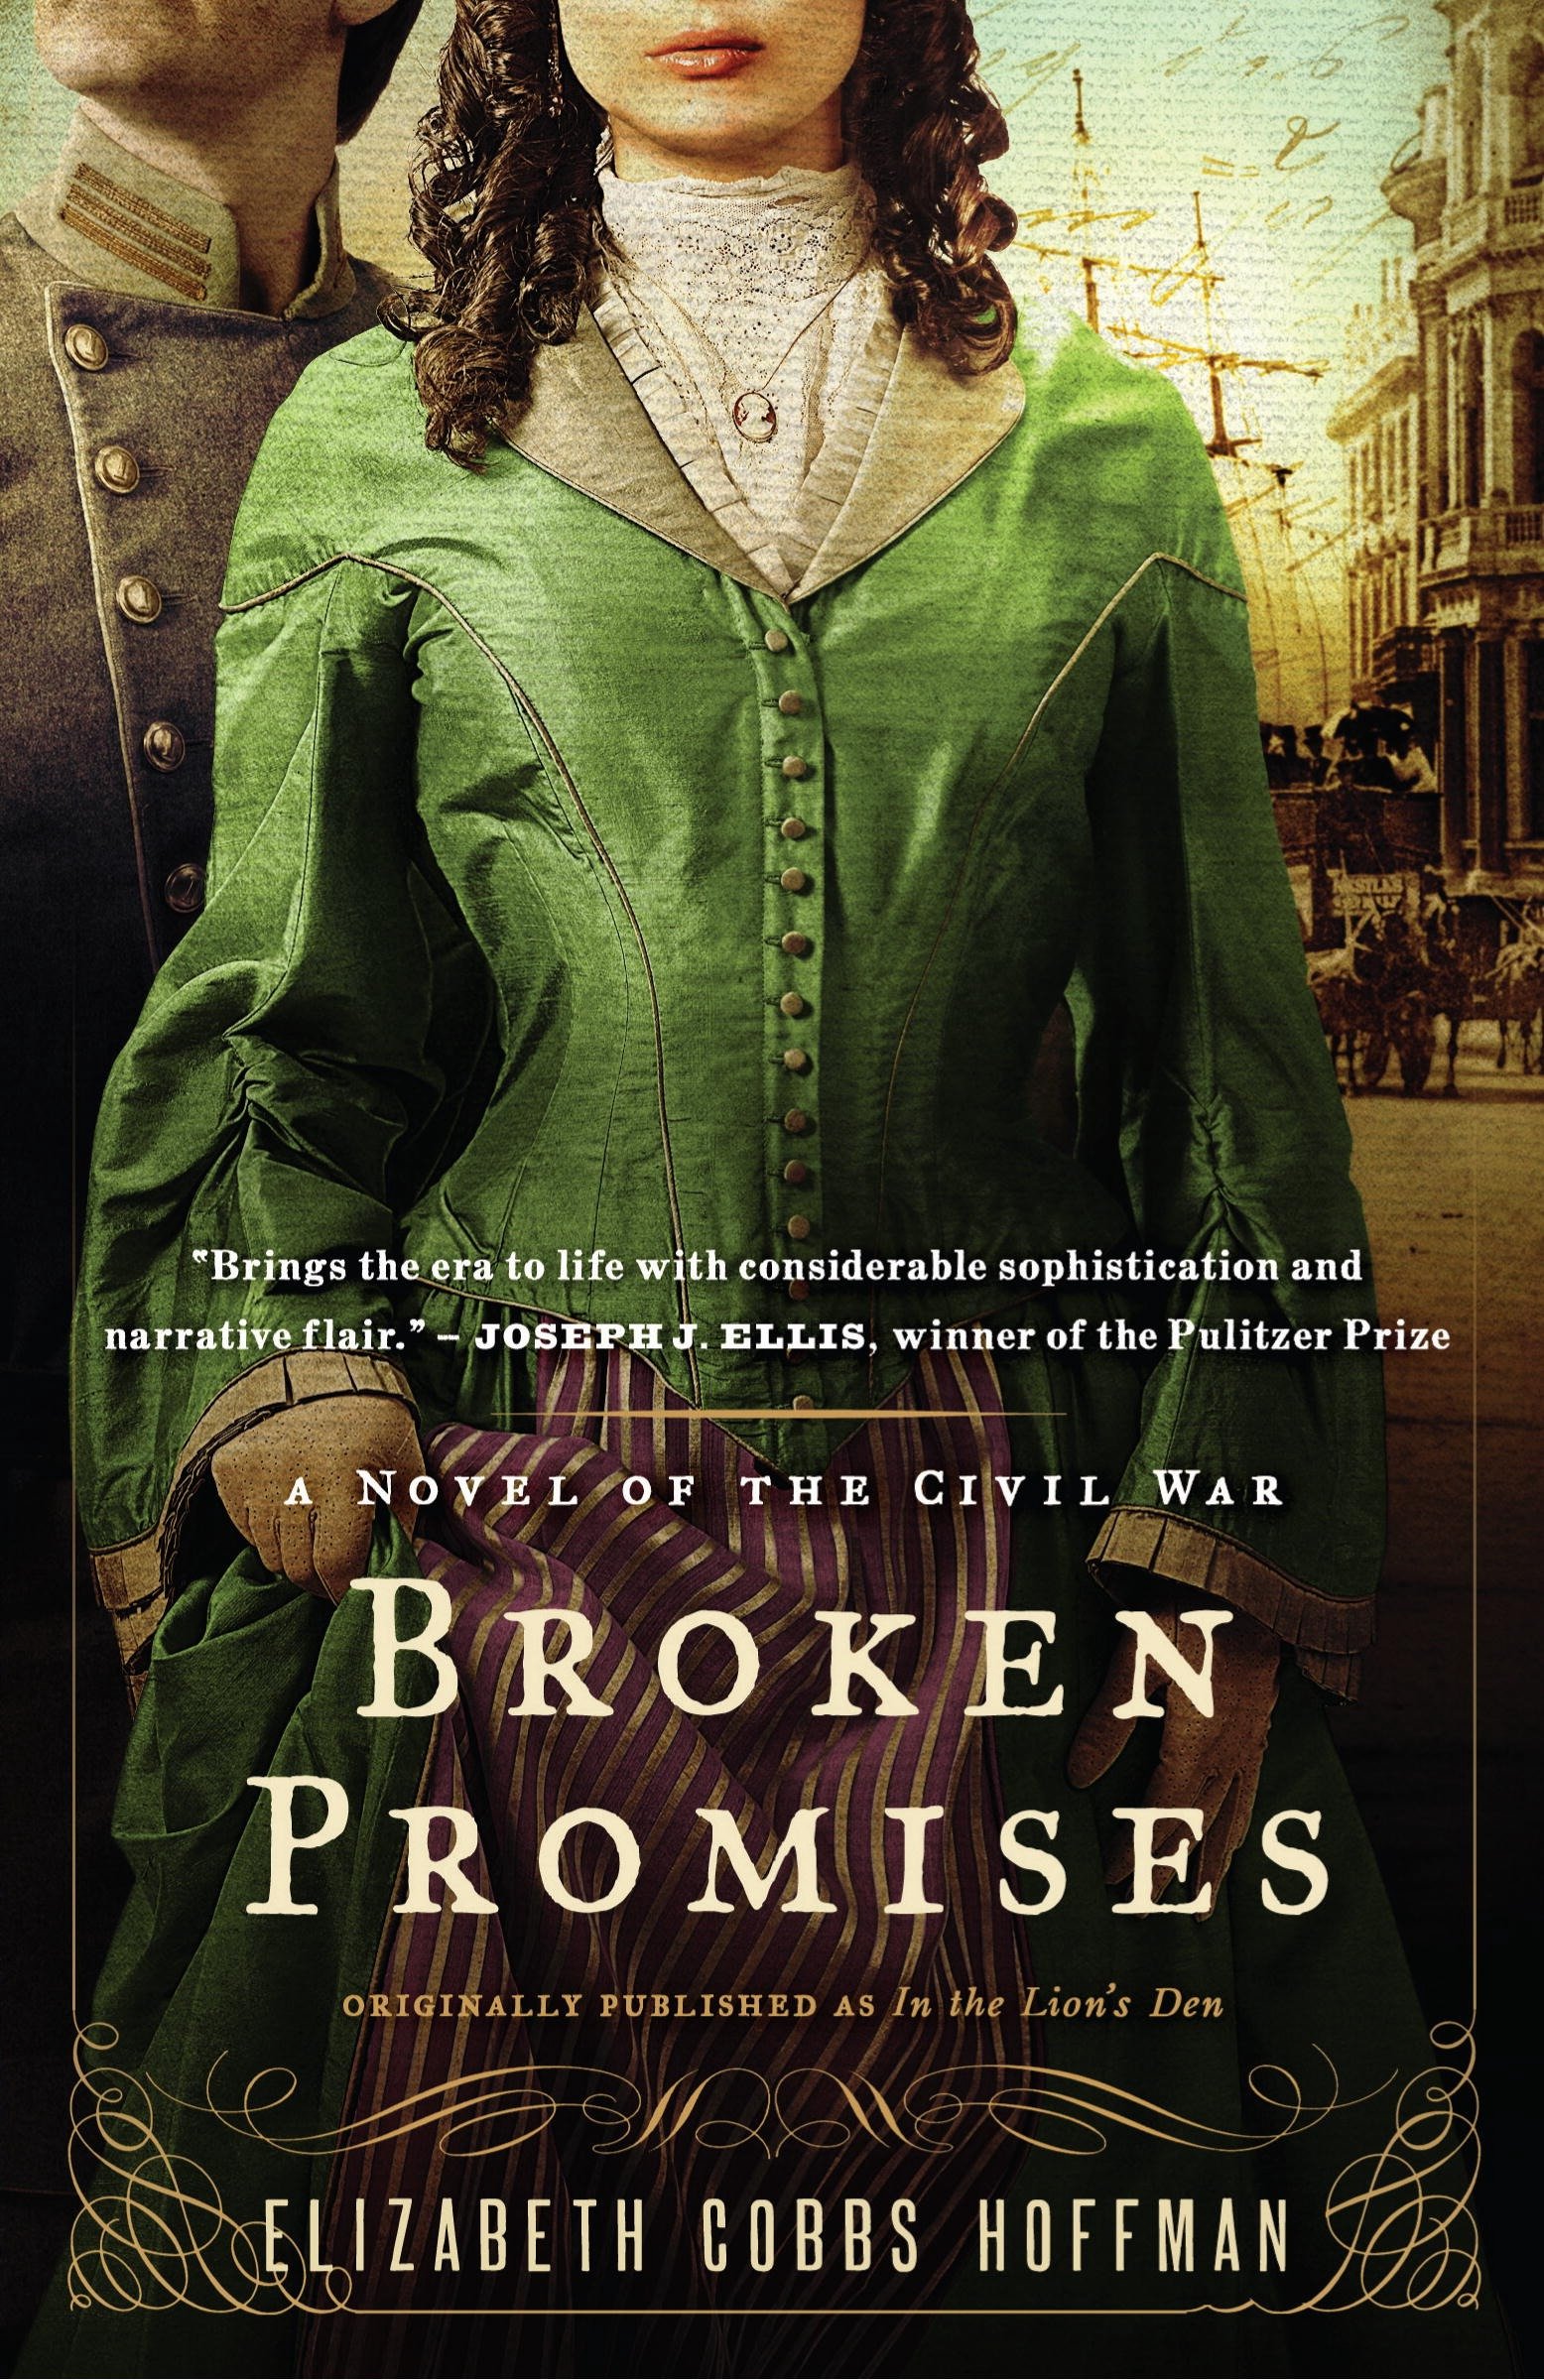 Broken promises a novel of the Civil War cover image